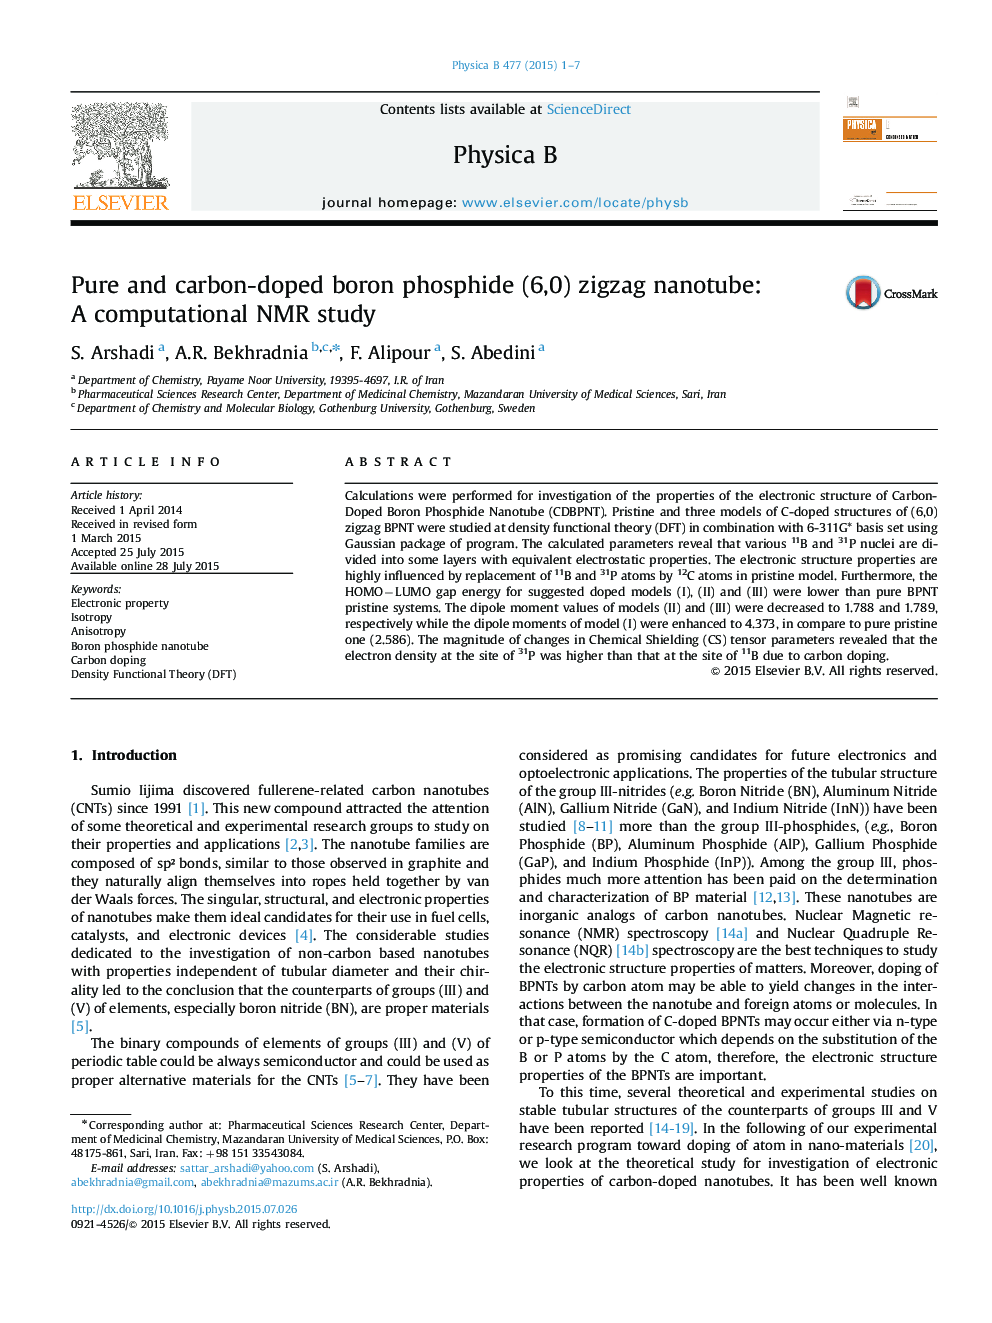 Pure and carbon-doped boron phosphide (6,0) zigzag nanotube: AÂ computational NMR study